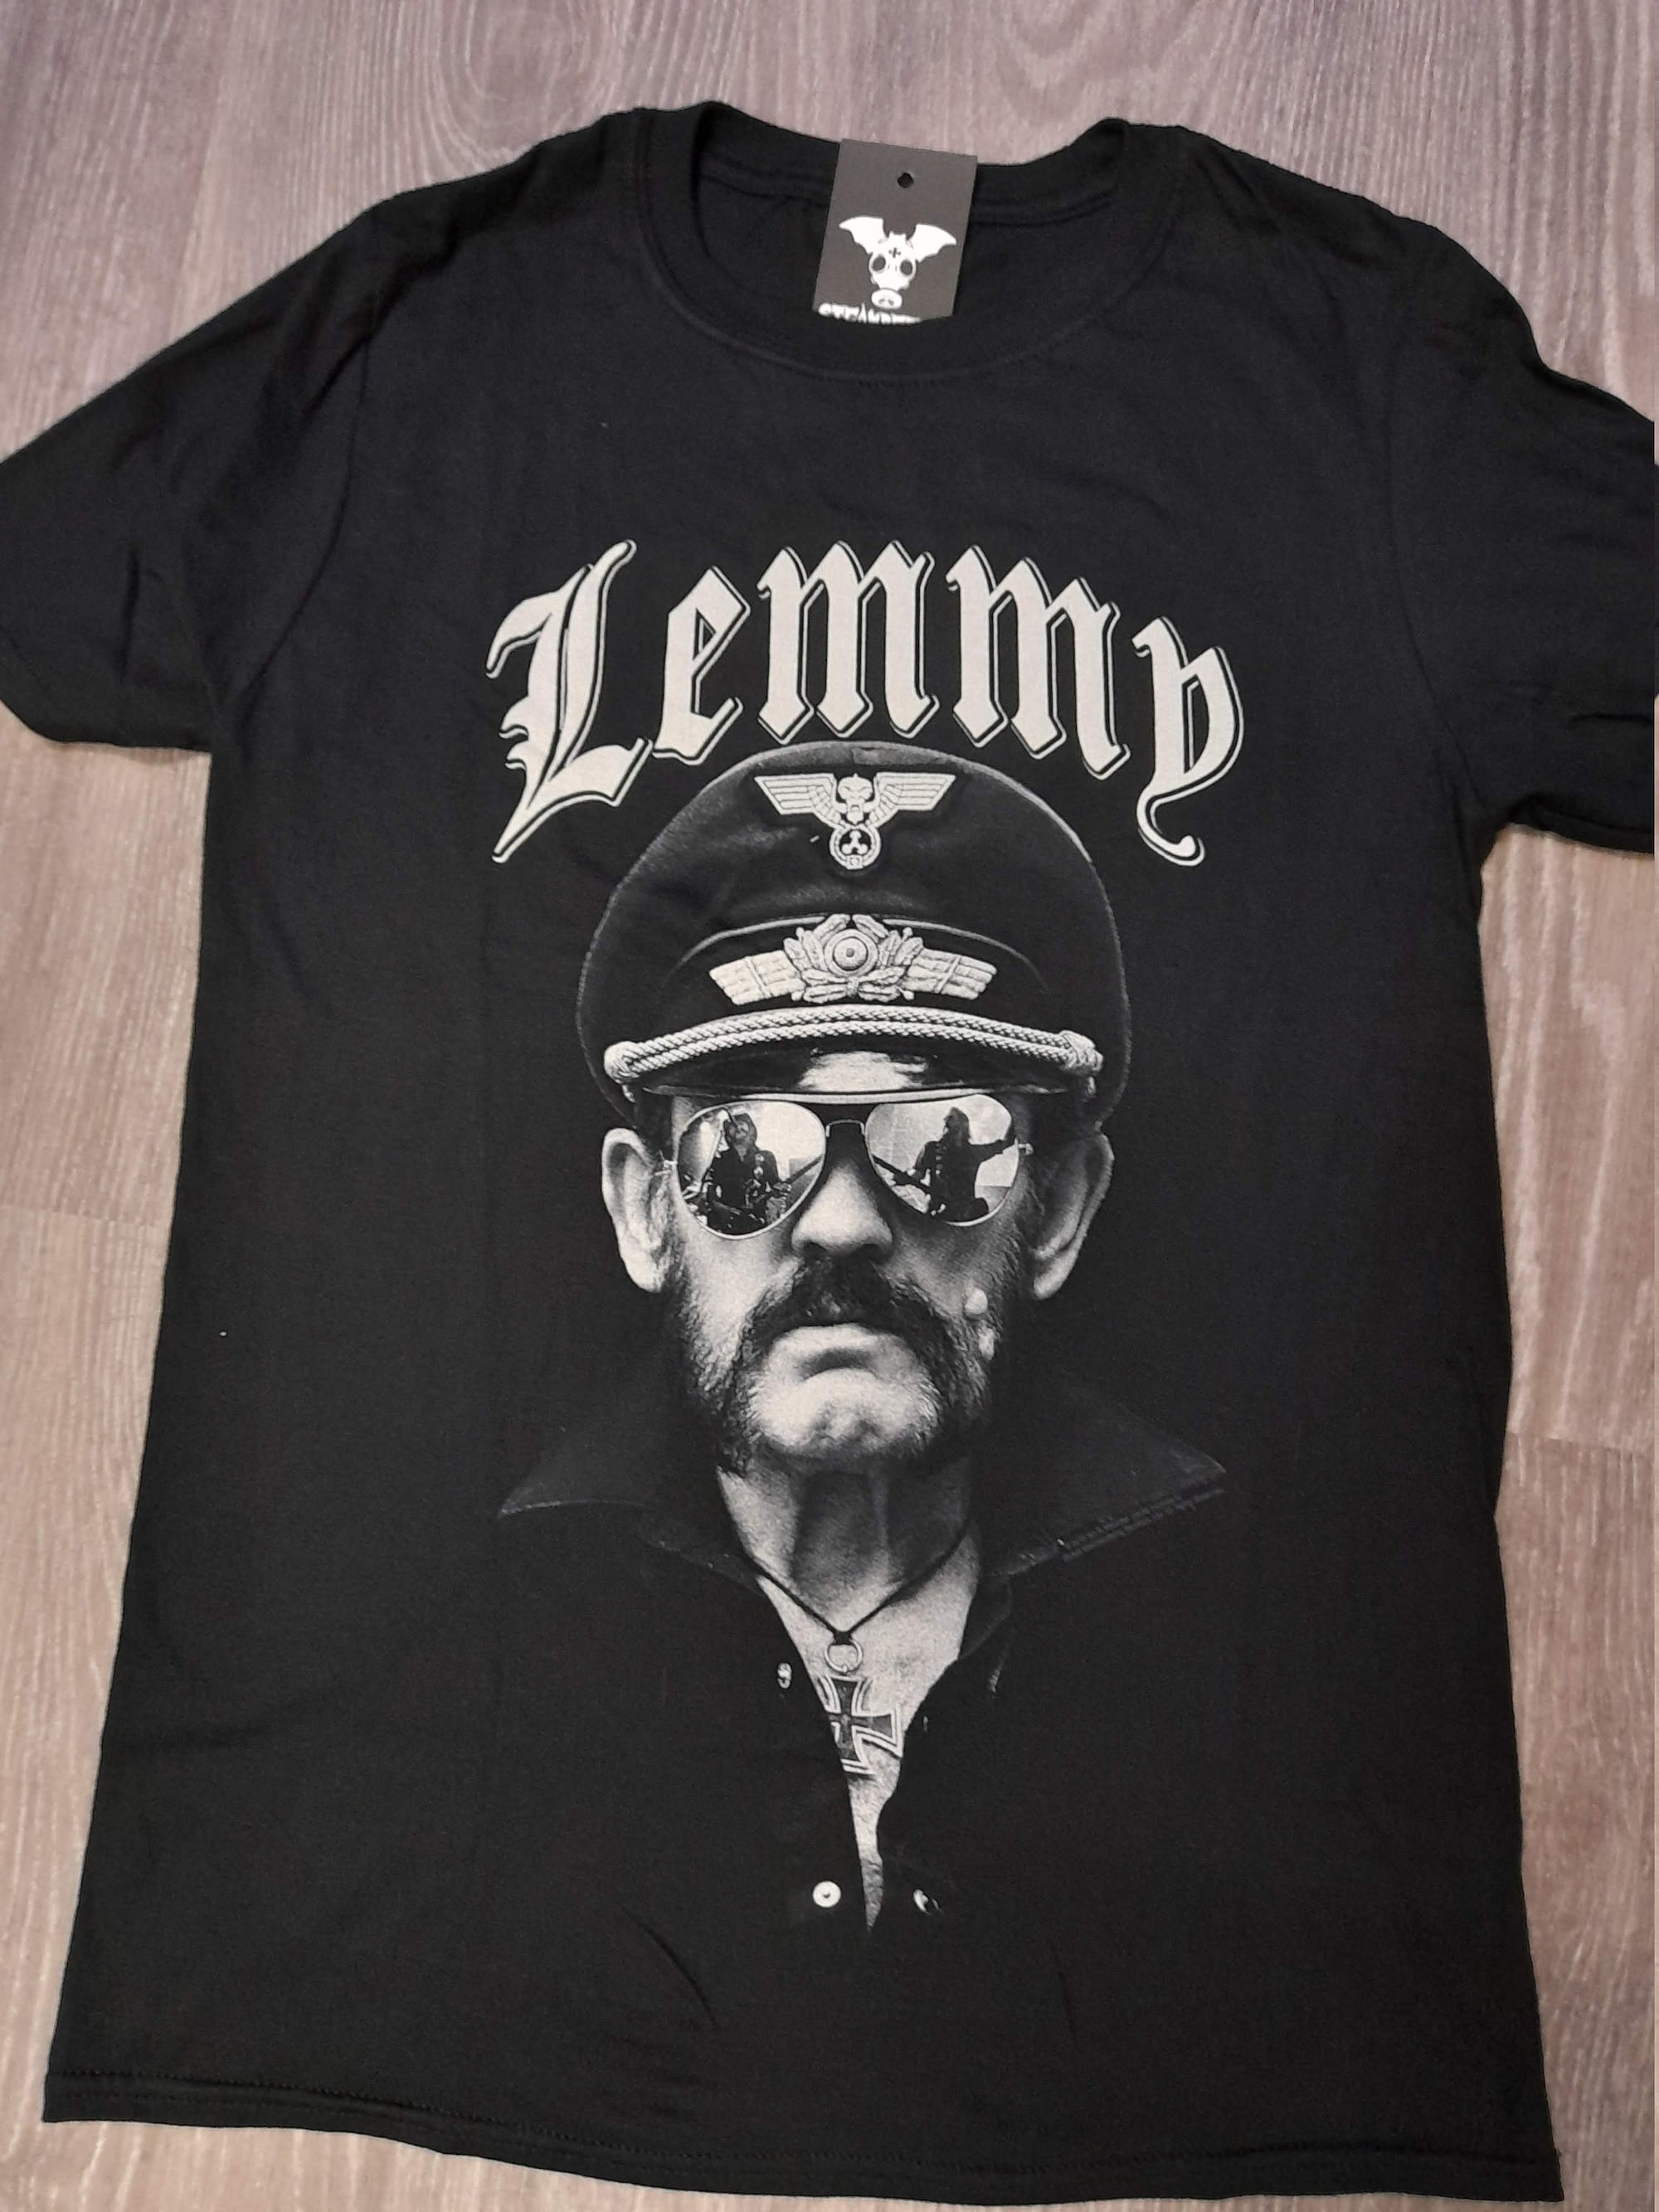 Discover Lemmy - motorhead - lemmy t-shirt - motorhead t-shirt -  Motorhead t-shirt